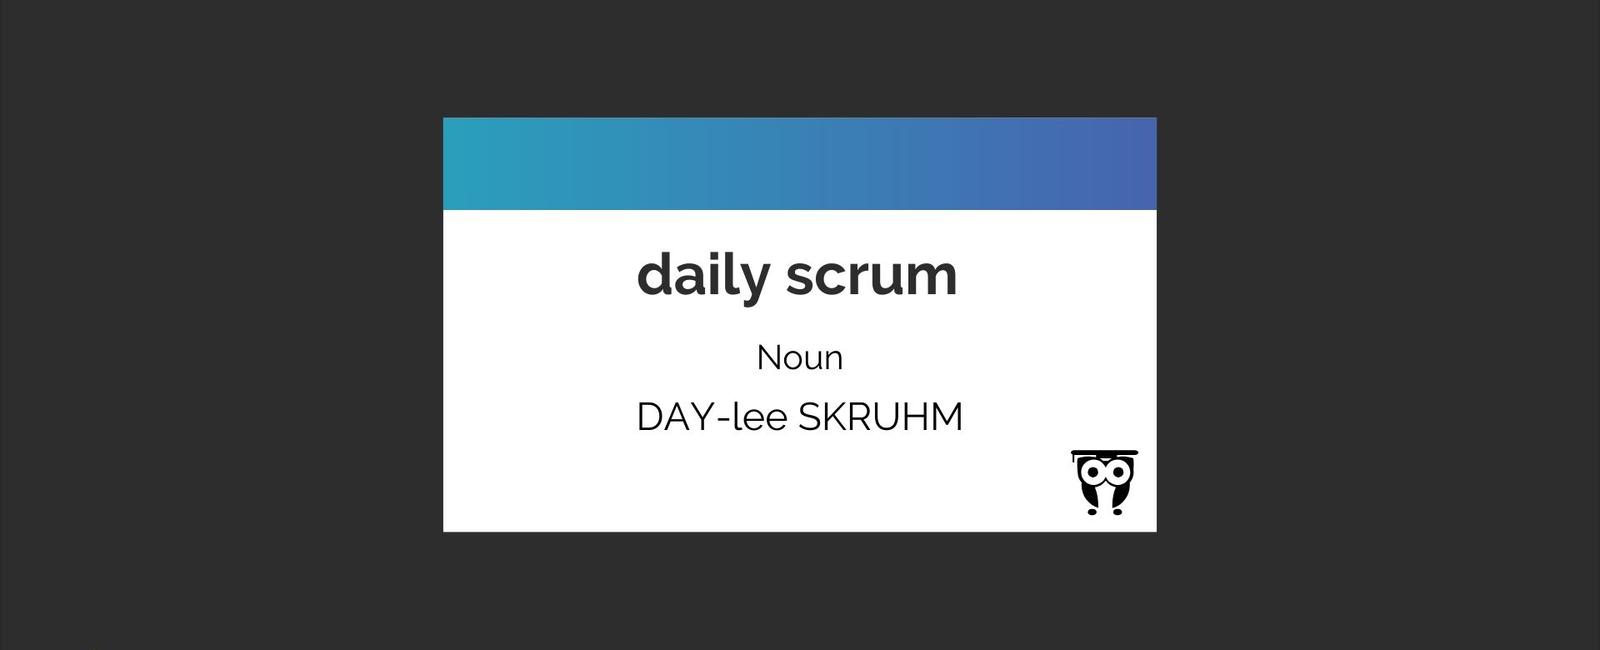 Daily Scrum